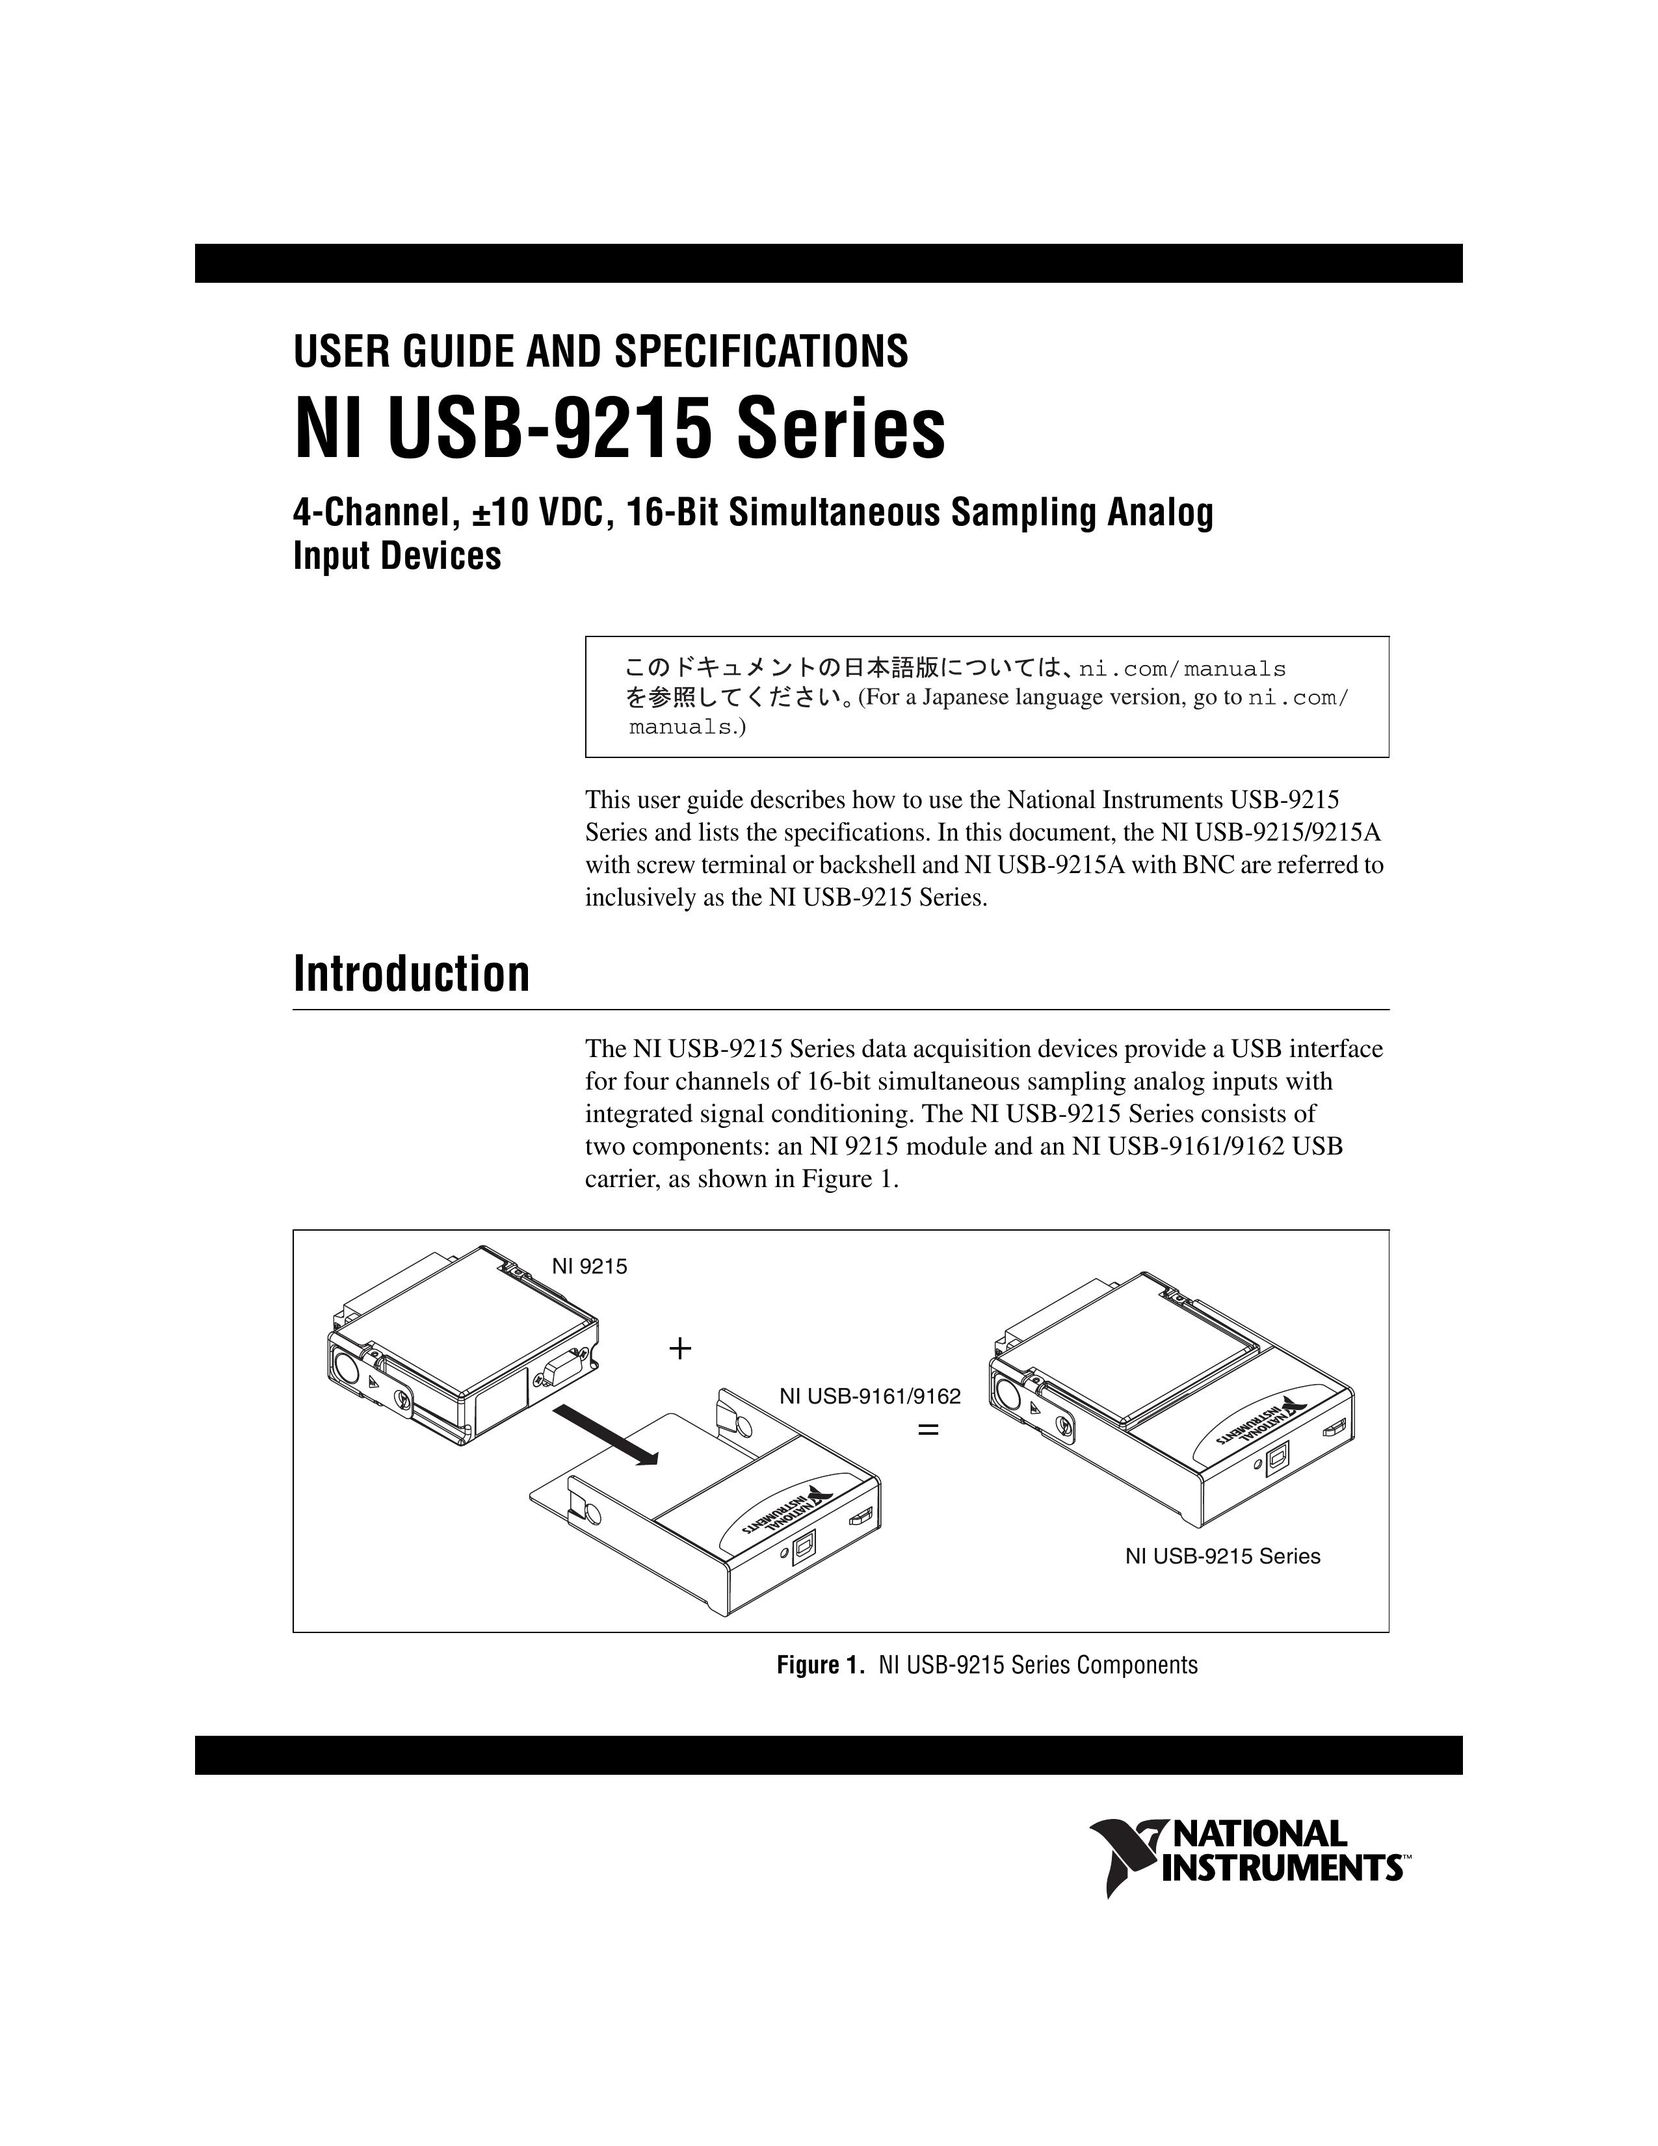 National Instruments NI USB-9215 Computer Hardware User Manual